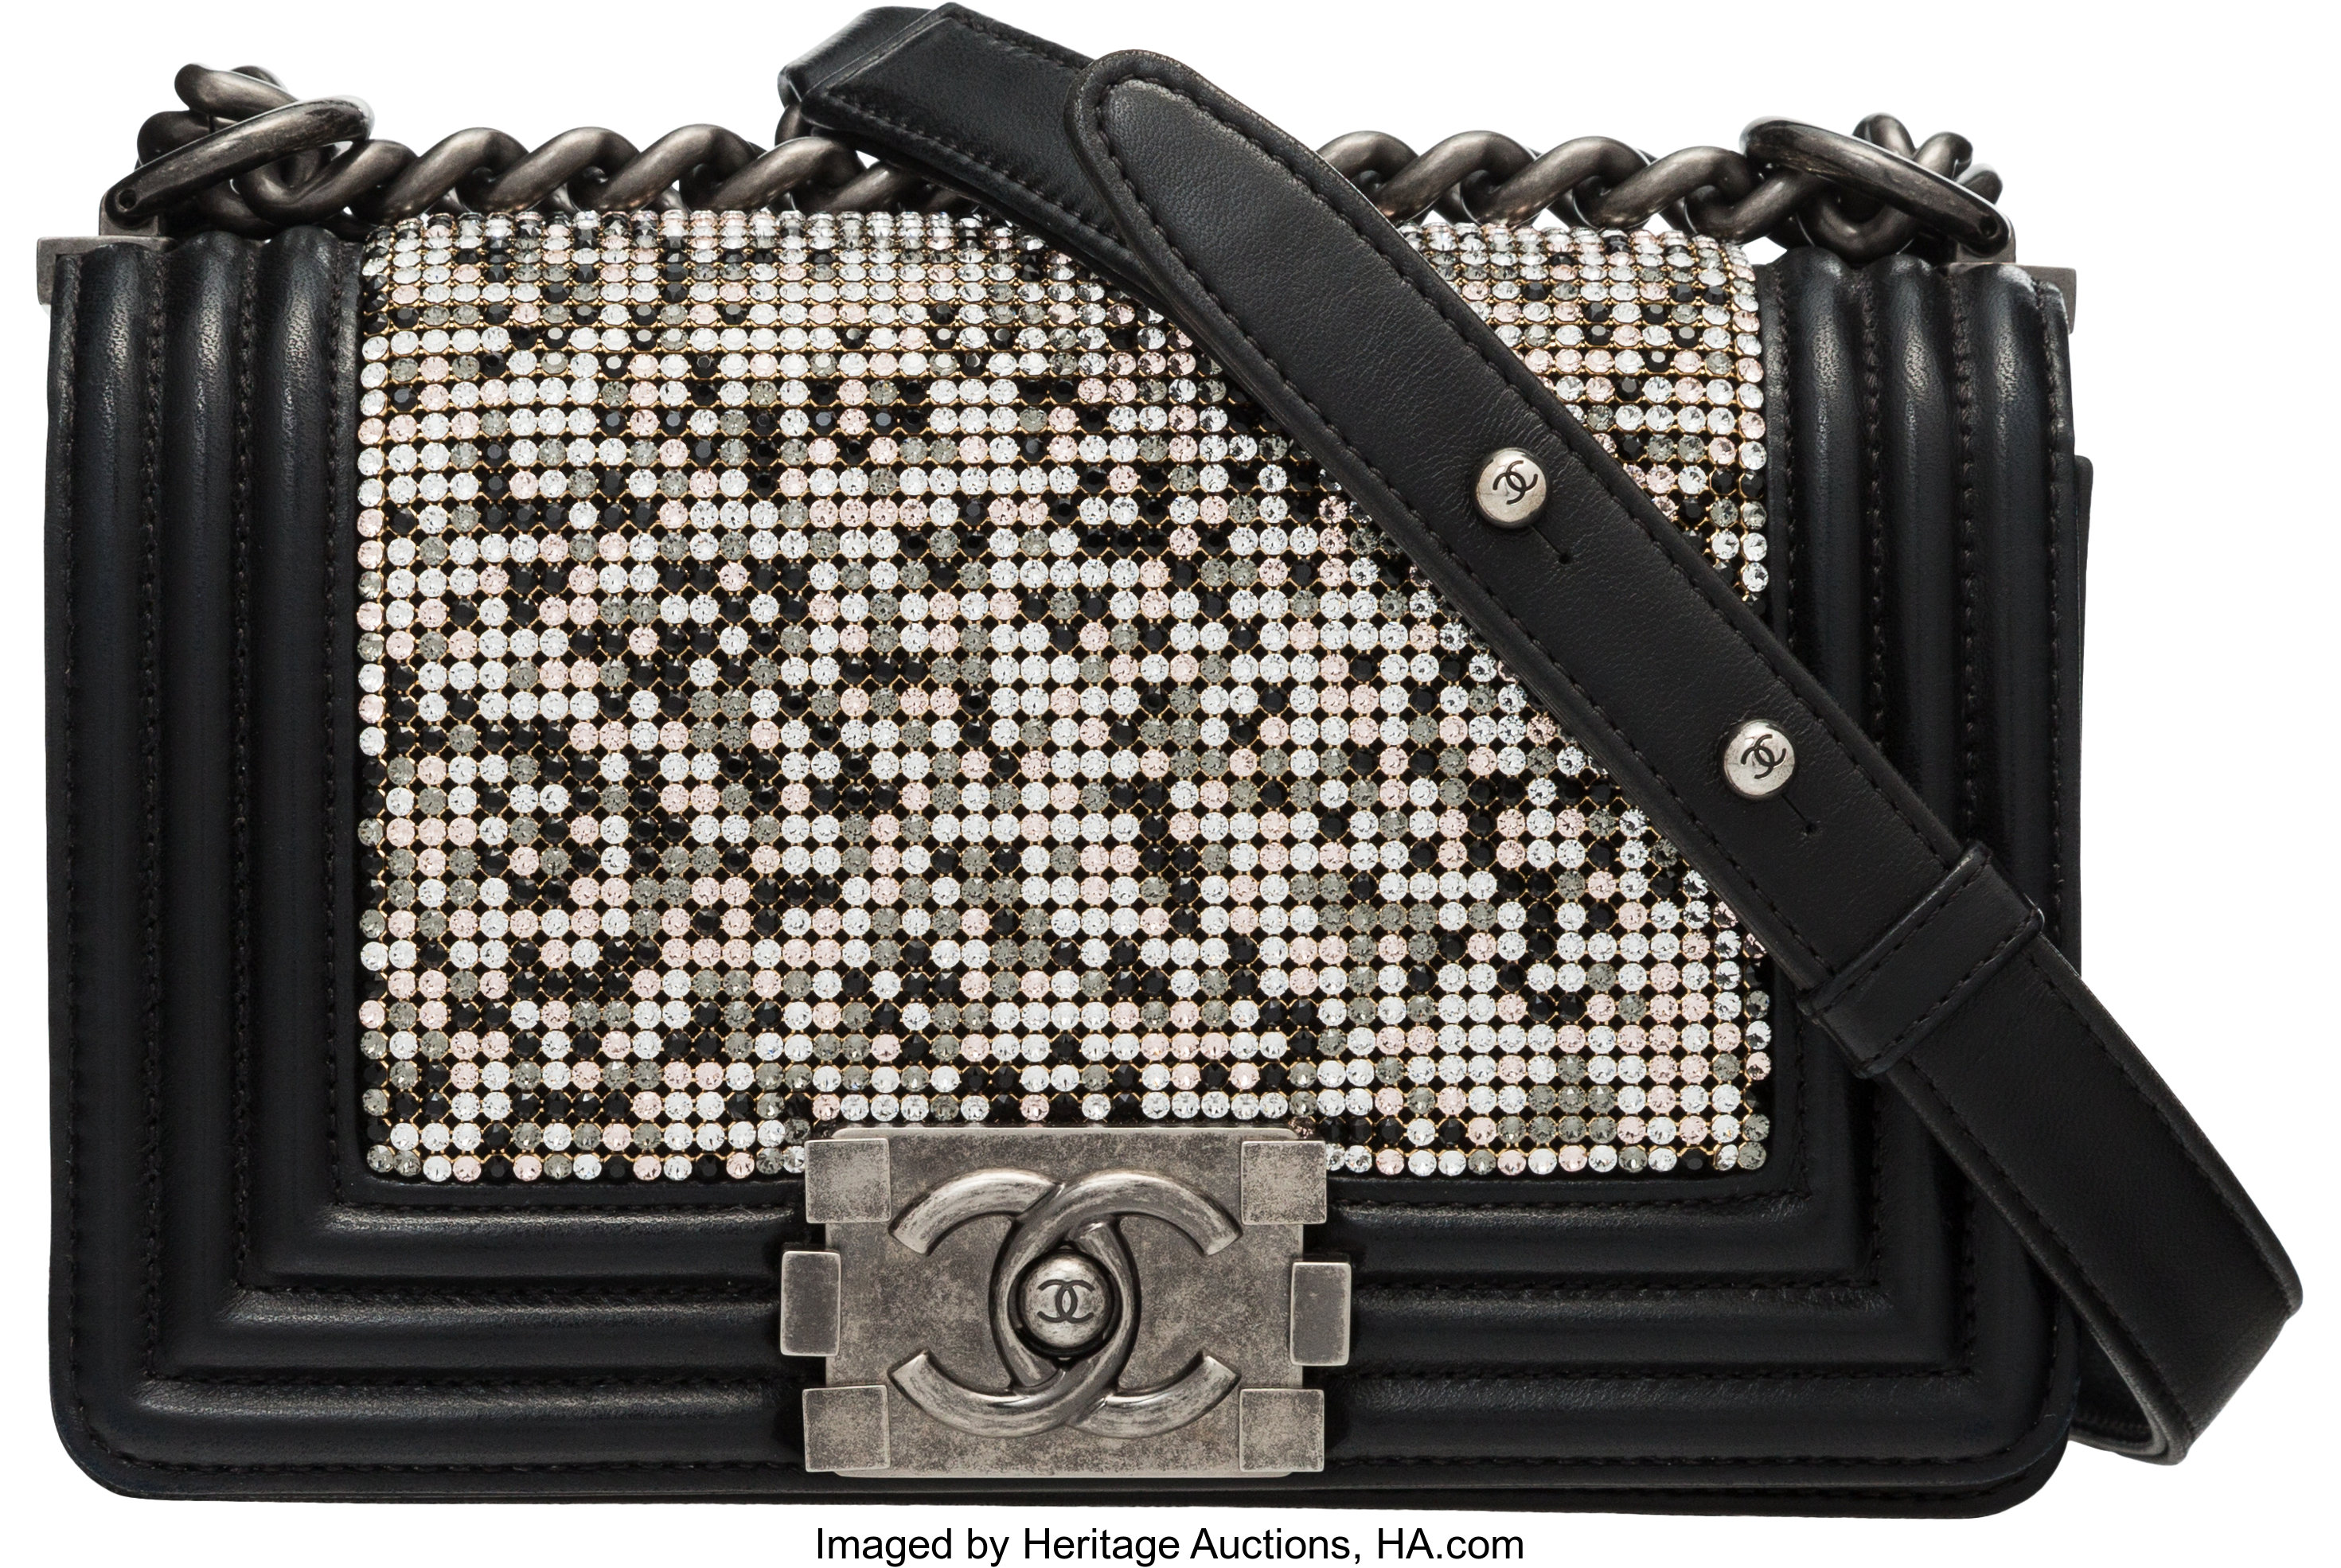 Black Leather With Swarovski Crystals And Rivets Handbag - Forever